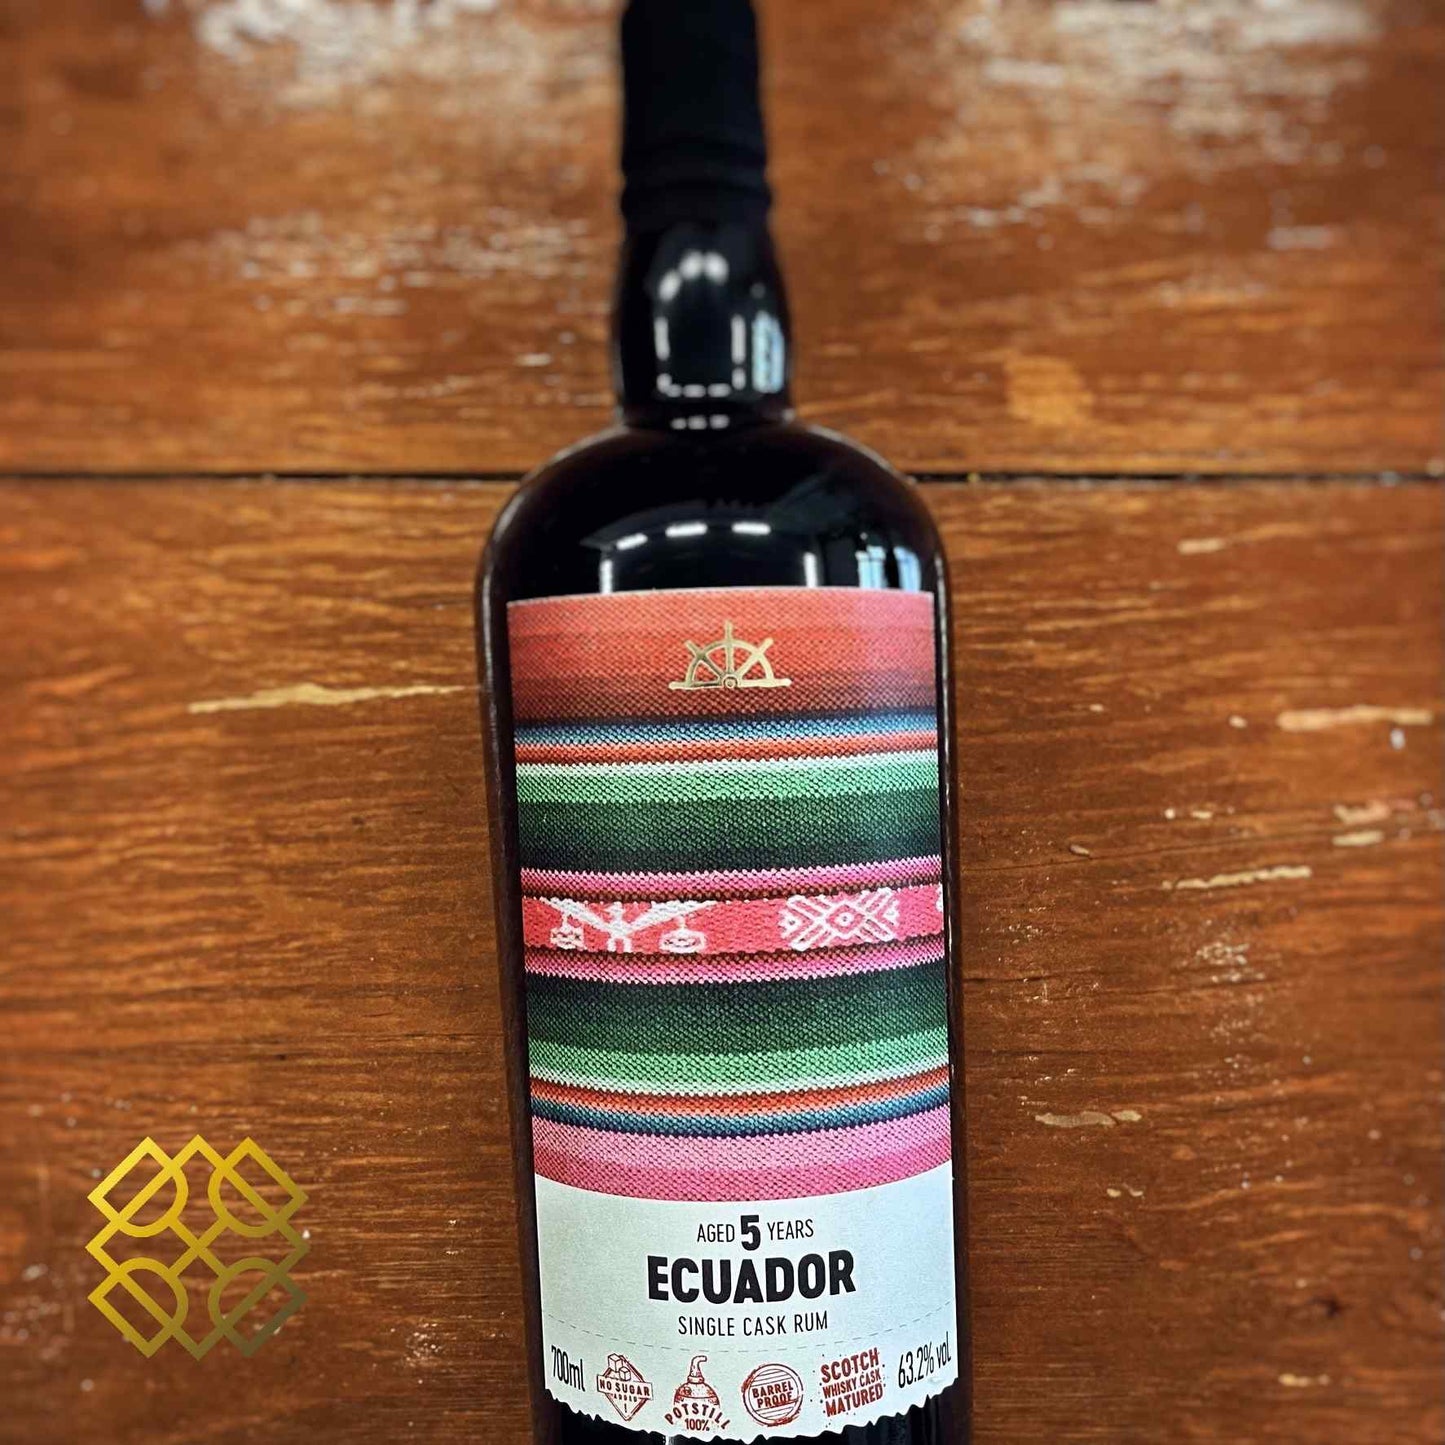 Ecuador - 5YO,  63.2%  Type: Rum